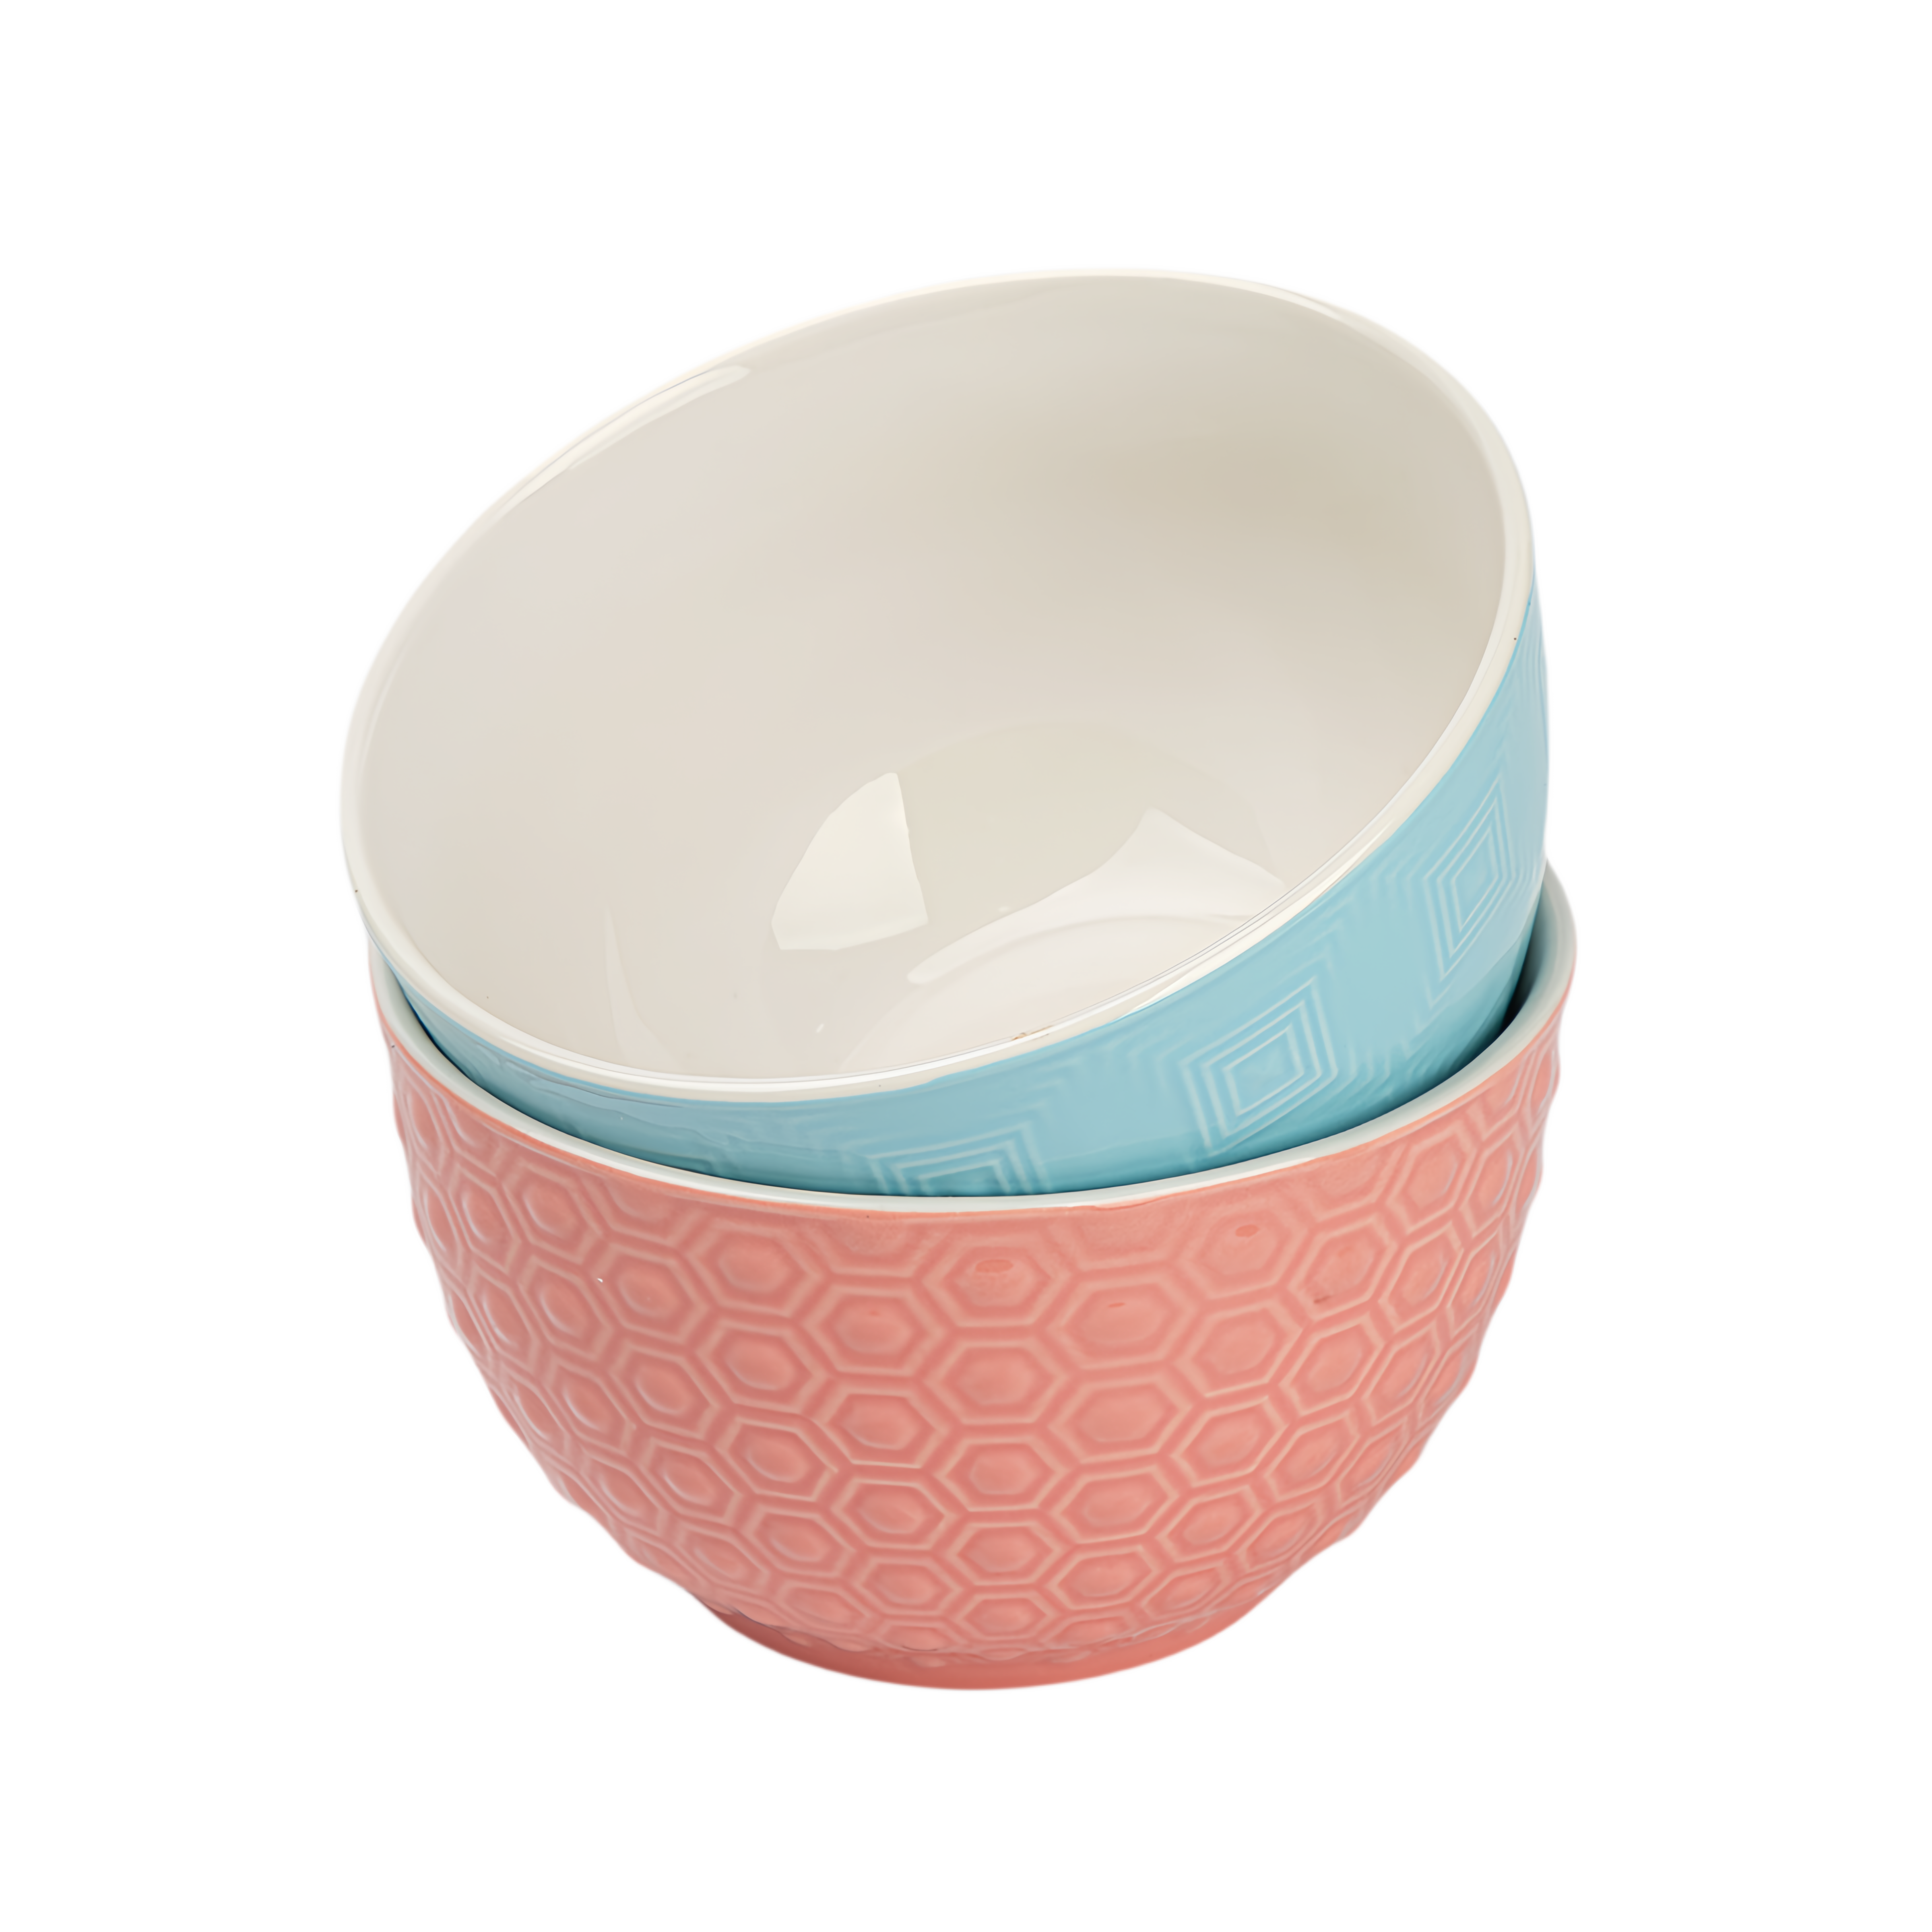 qinge Honeycomb Textured Ceramic Rice Bowl